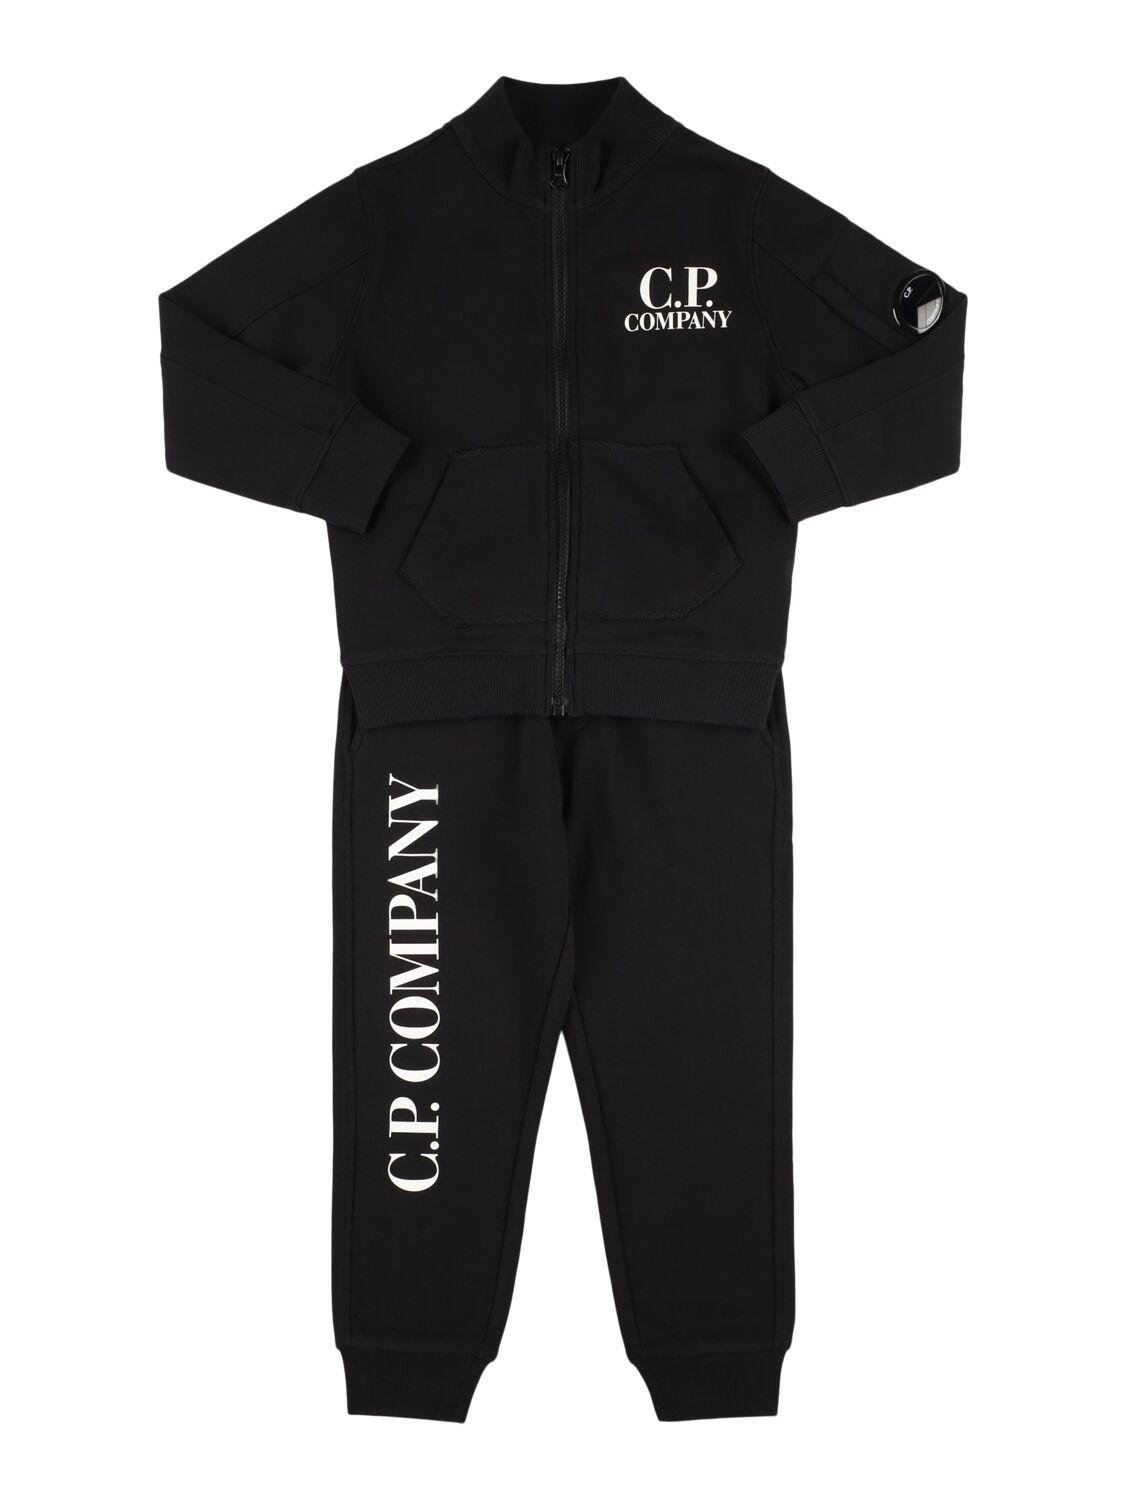 Cotton Sweatshirt & Sweatpants by C.P. COMPANY